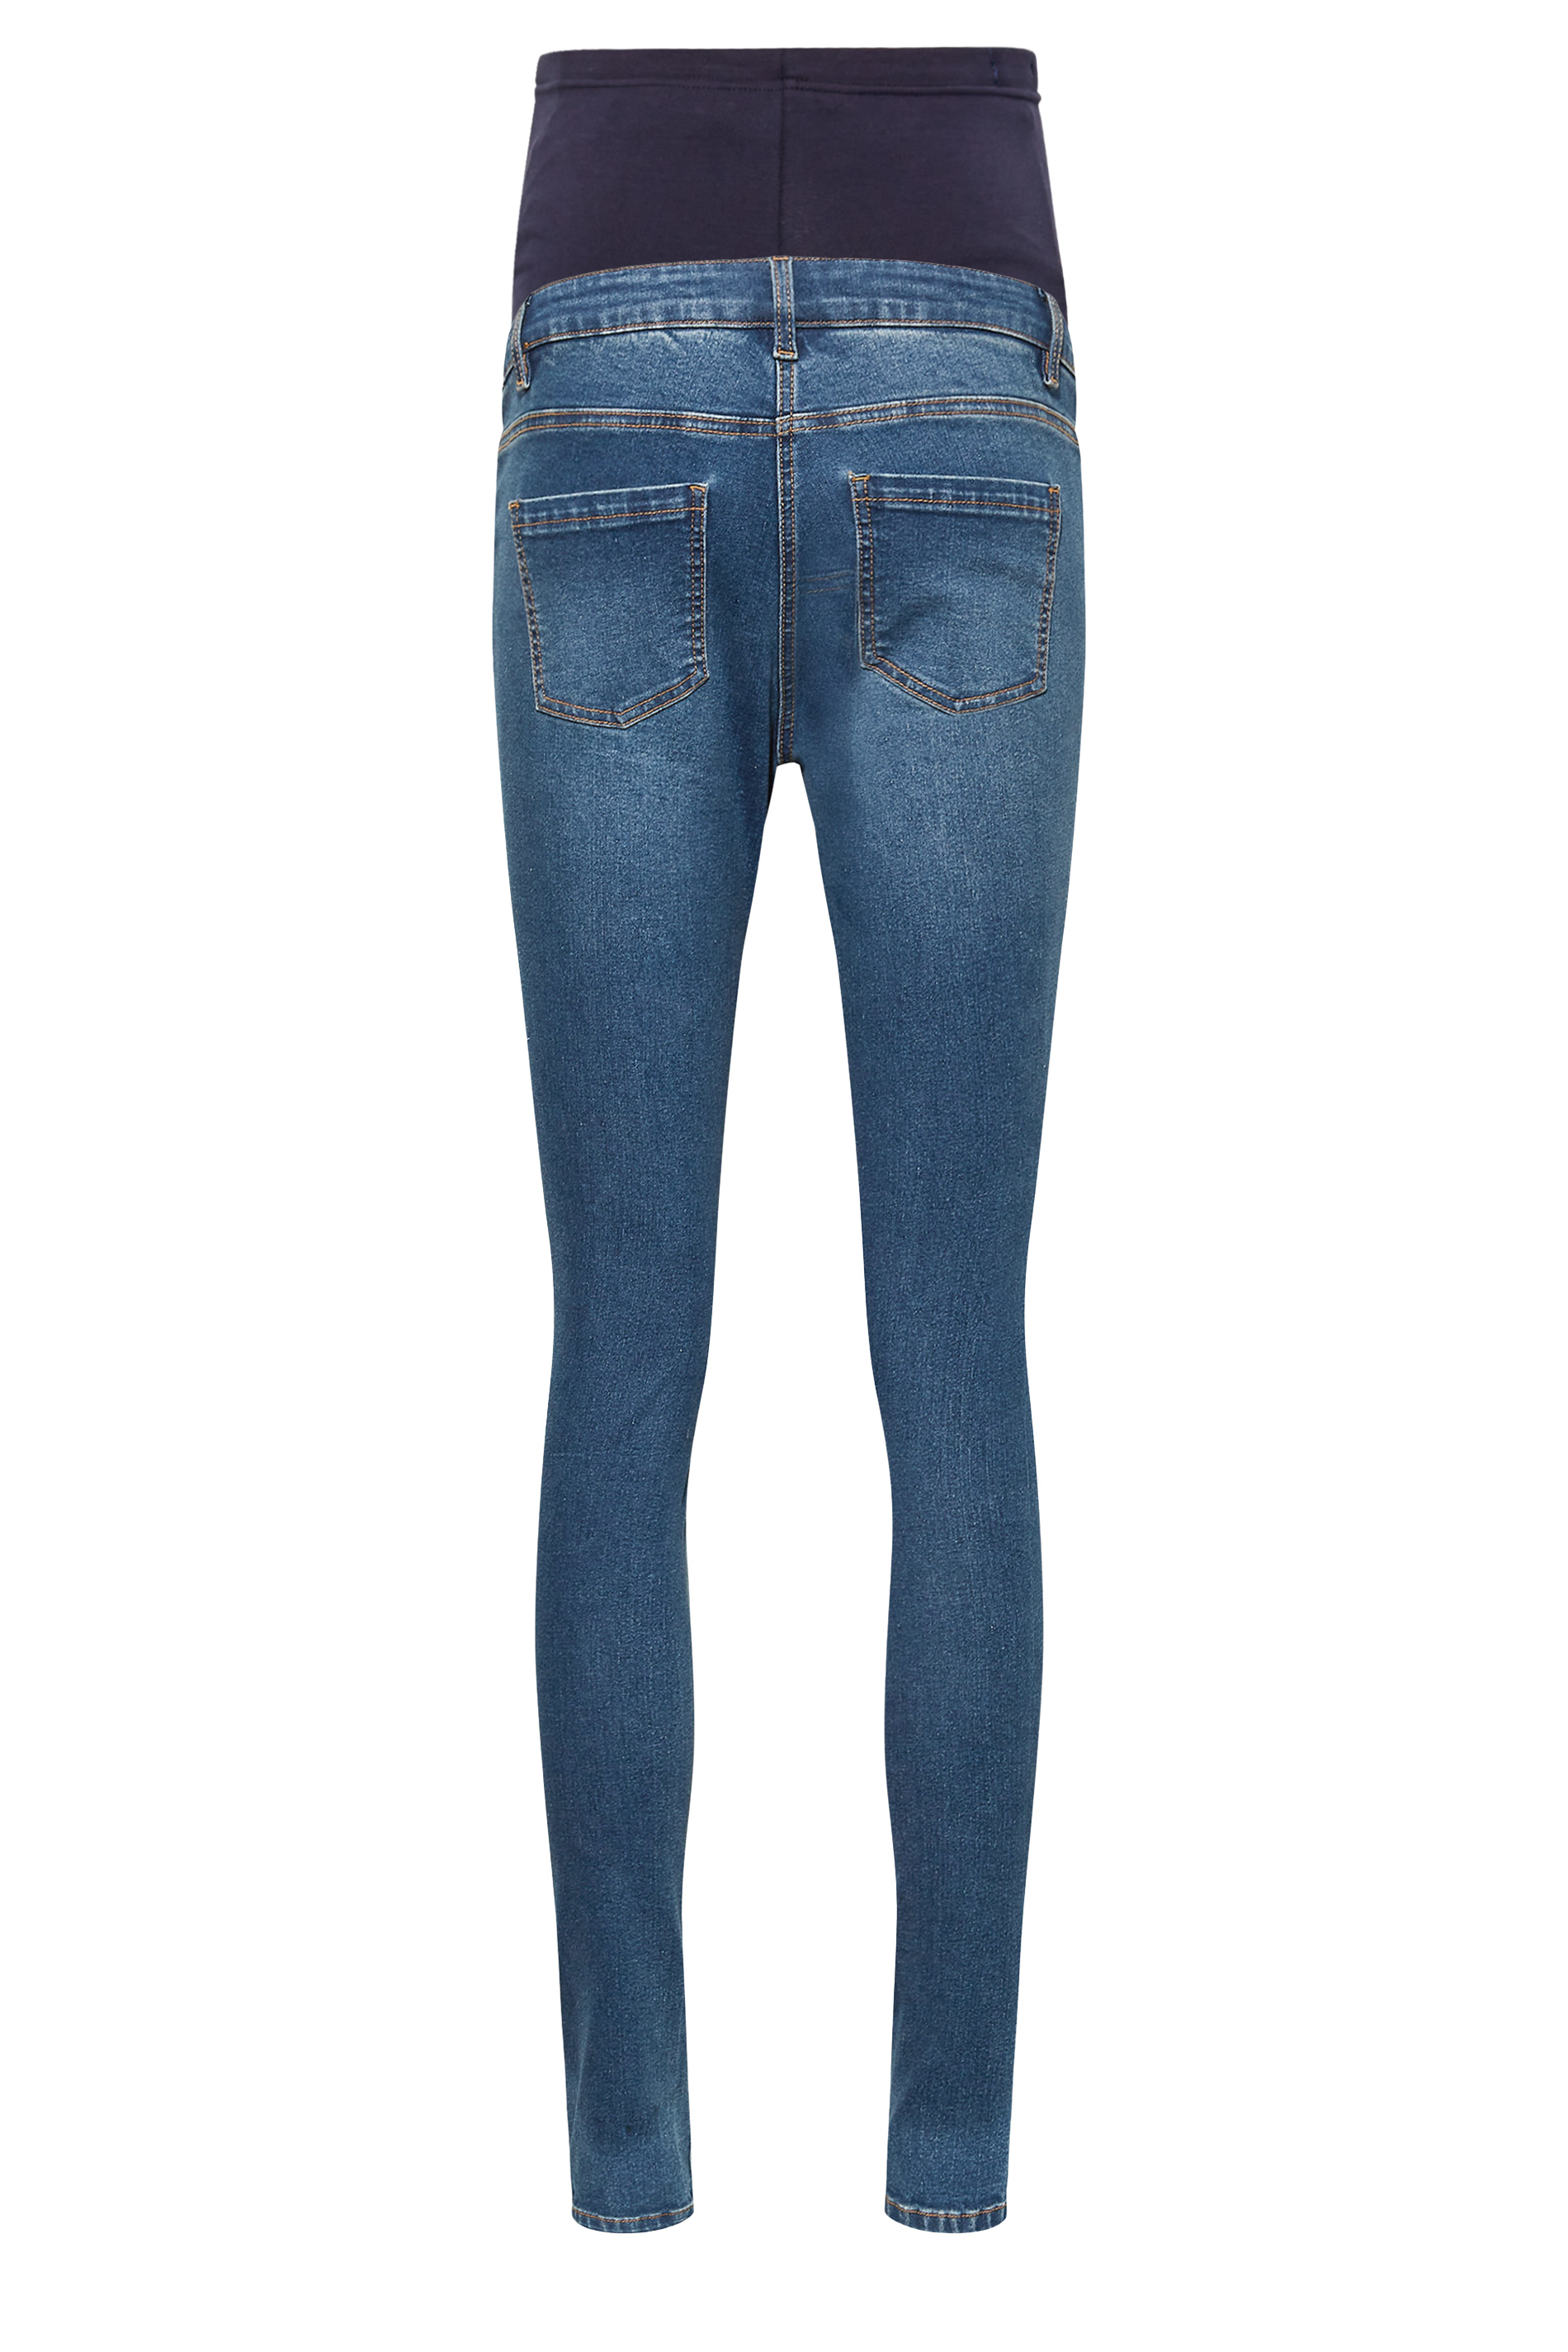 LTS Tall Women's Maternity Mid Blue Distressed AVA Skinny Jeans | Long Tall Sally 3